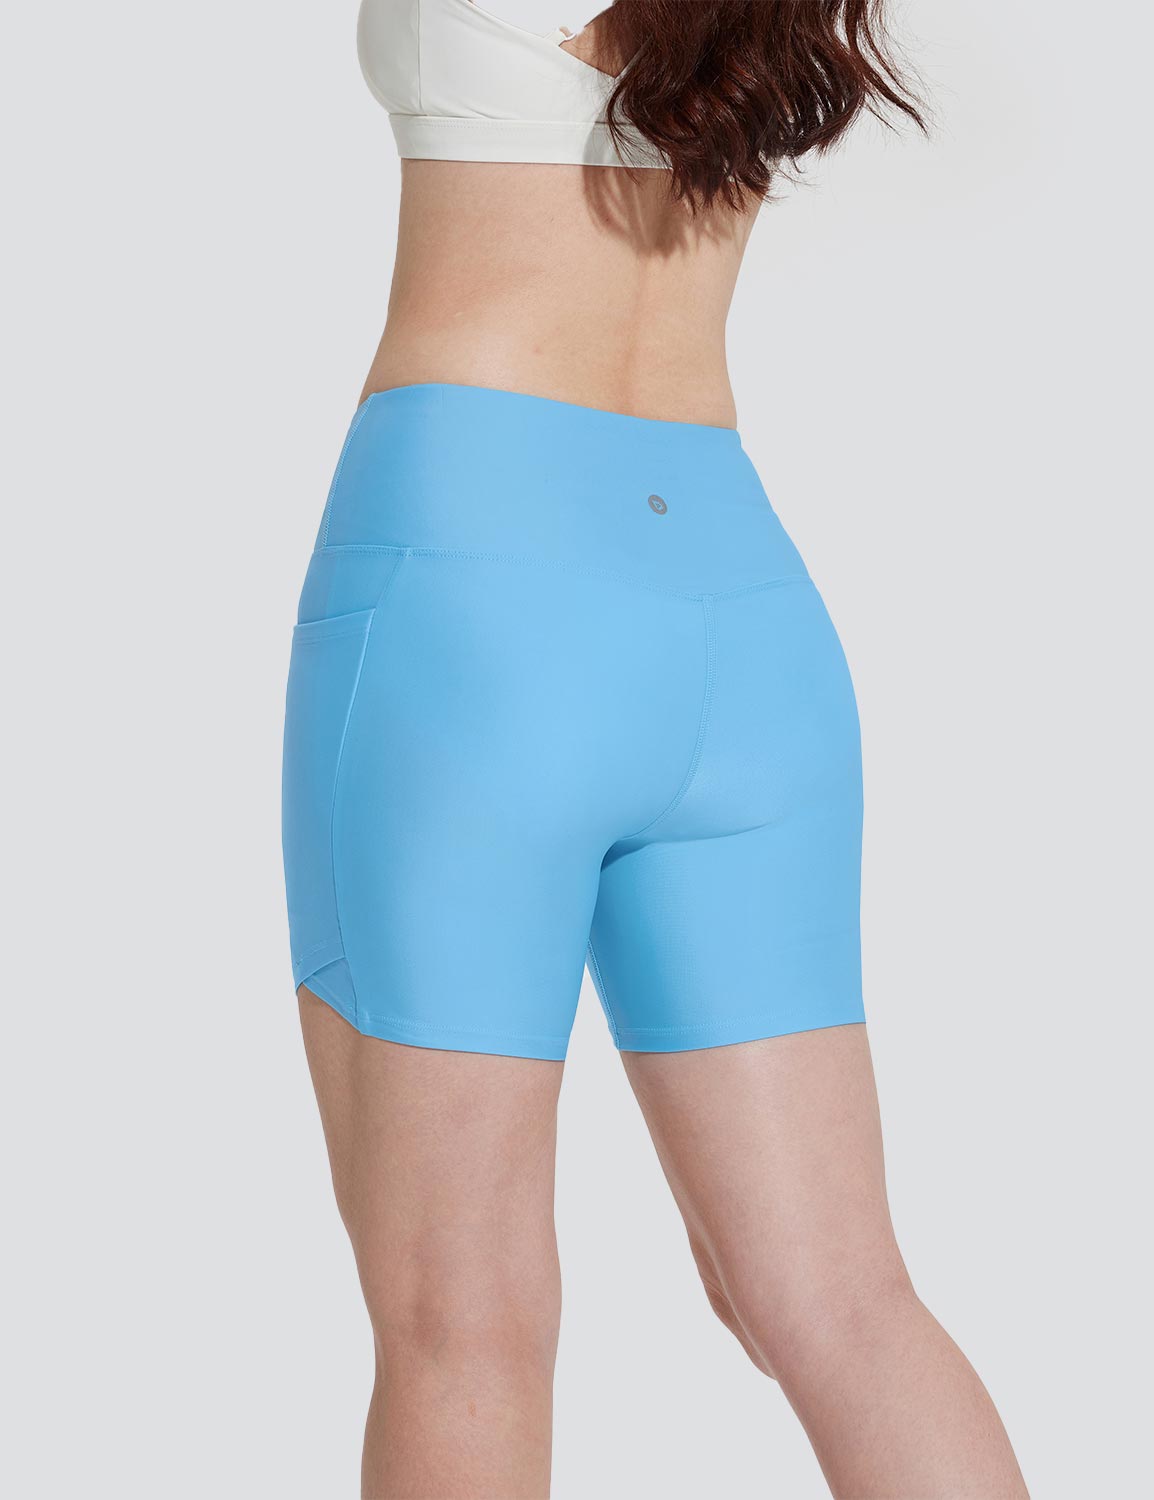 Baleaf Women's Quick Dry Pocket Casual Swim Shorts Ethereal Blue Back